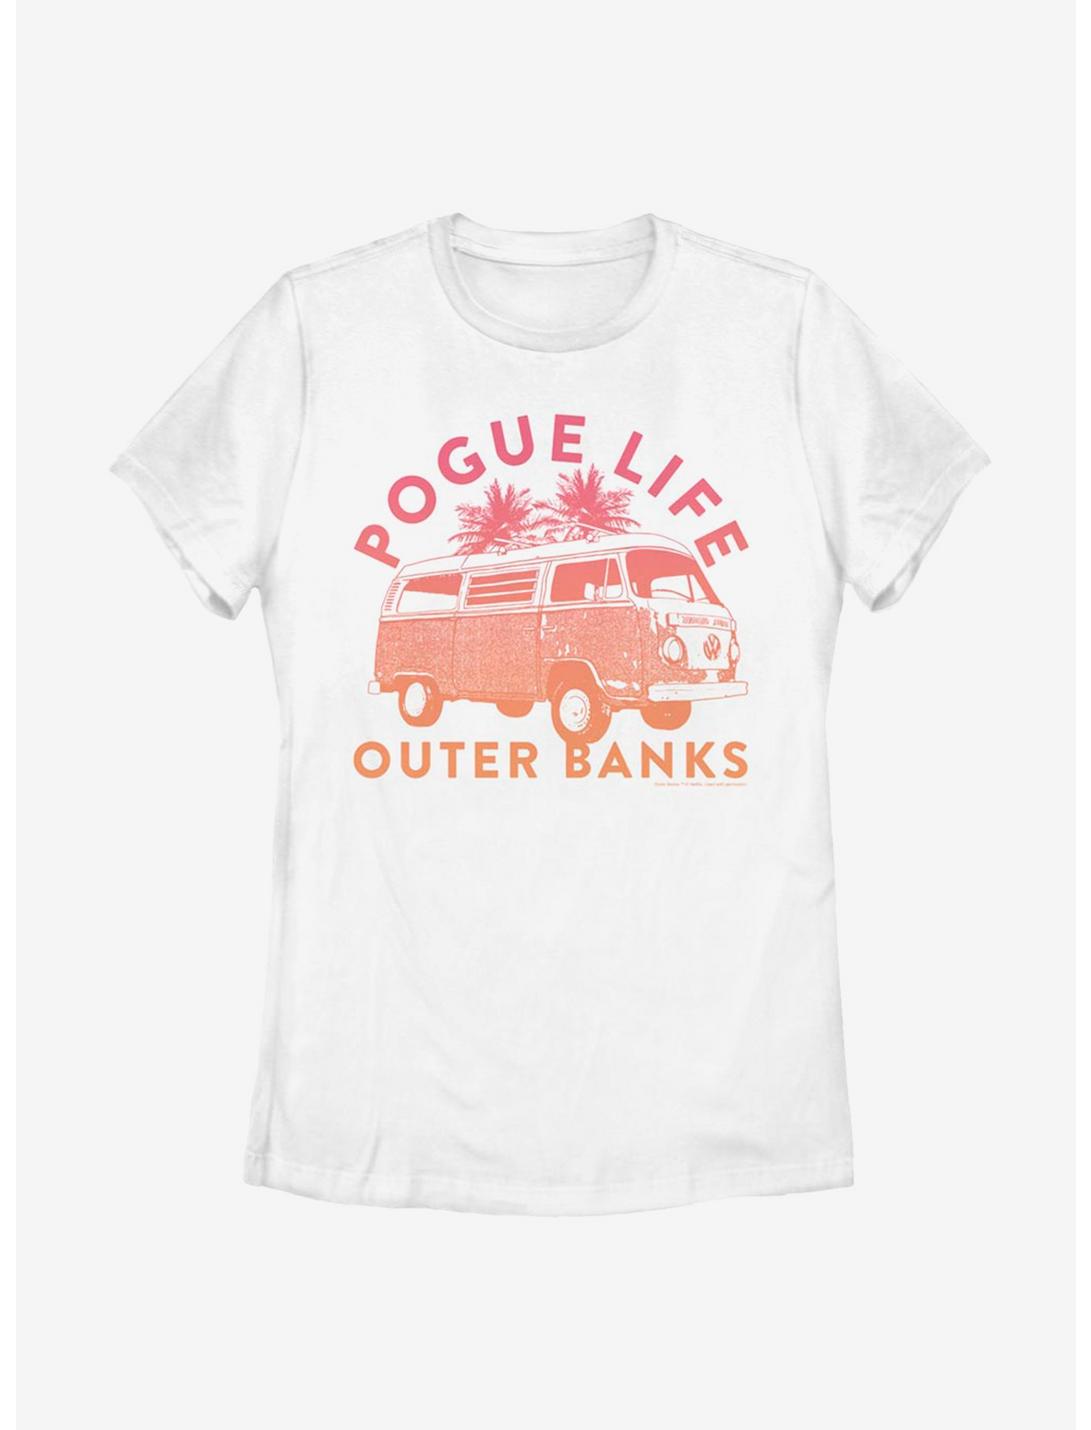 Outer Banks Pogue Life Womens T-Shirt, WHITE, hi-res